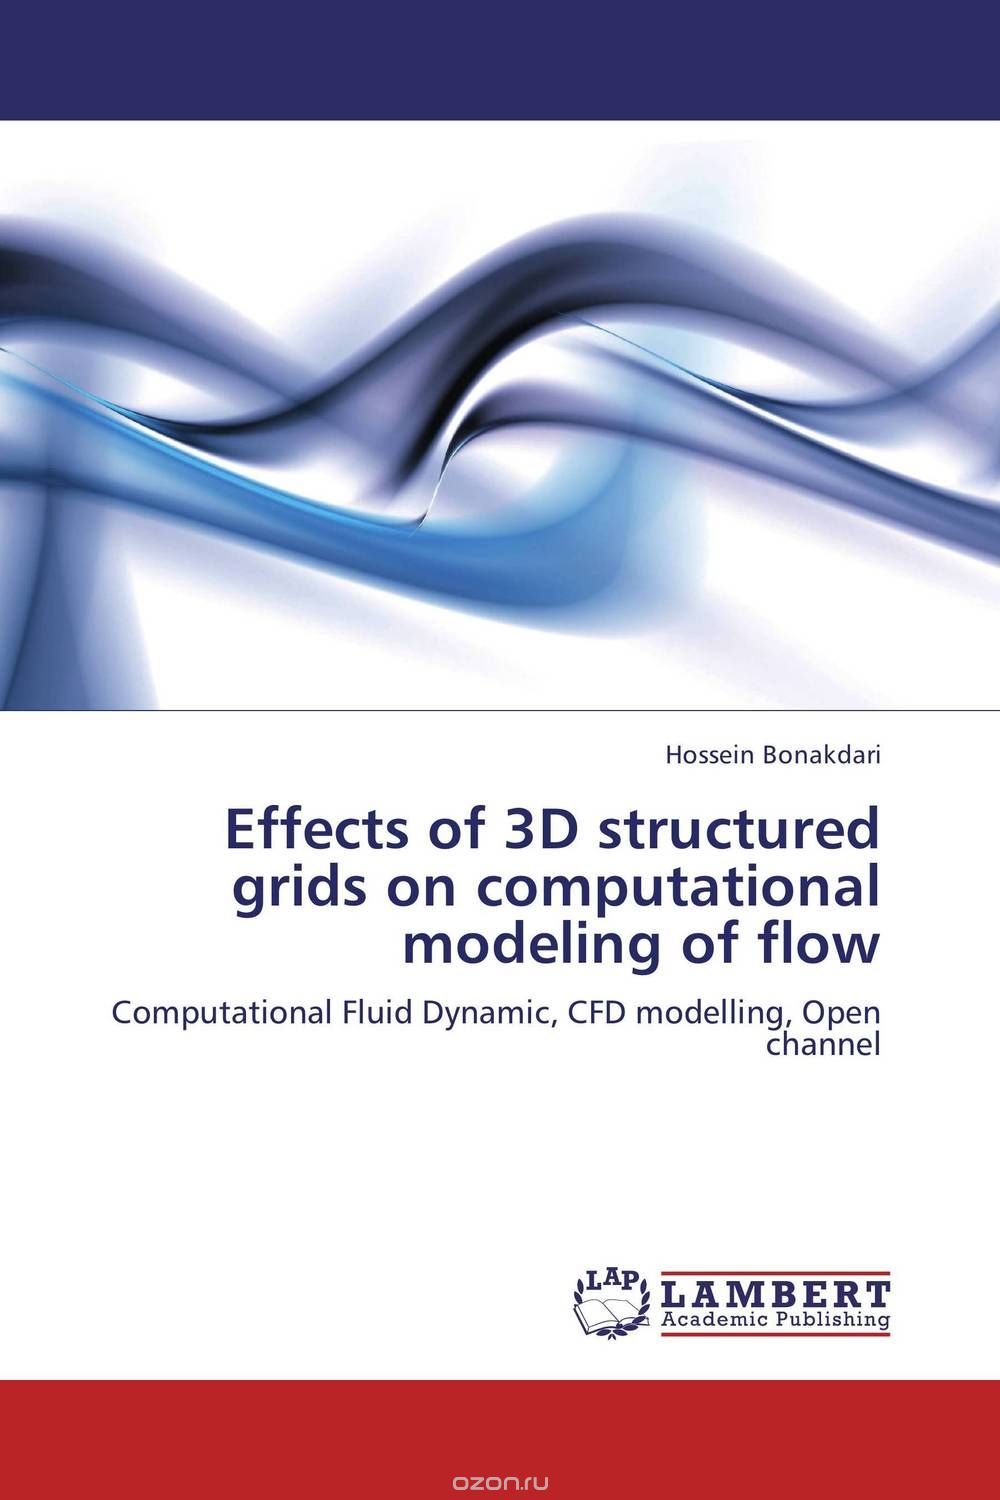 Скачать книгу "Effects of 3D structured grids on computational modeling of flow"